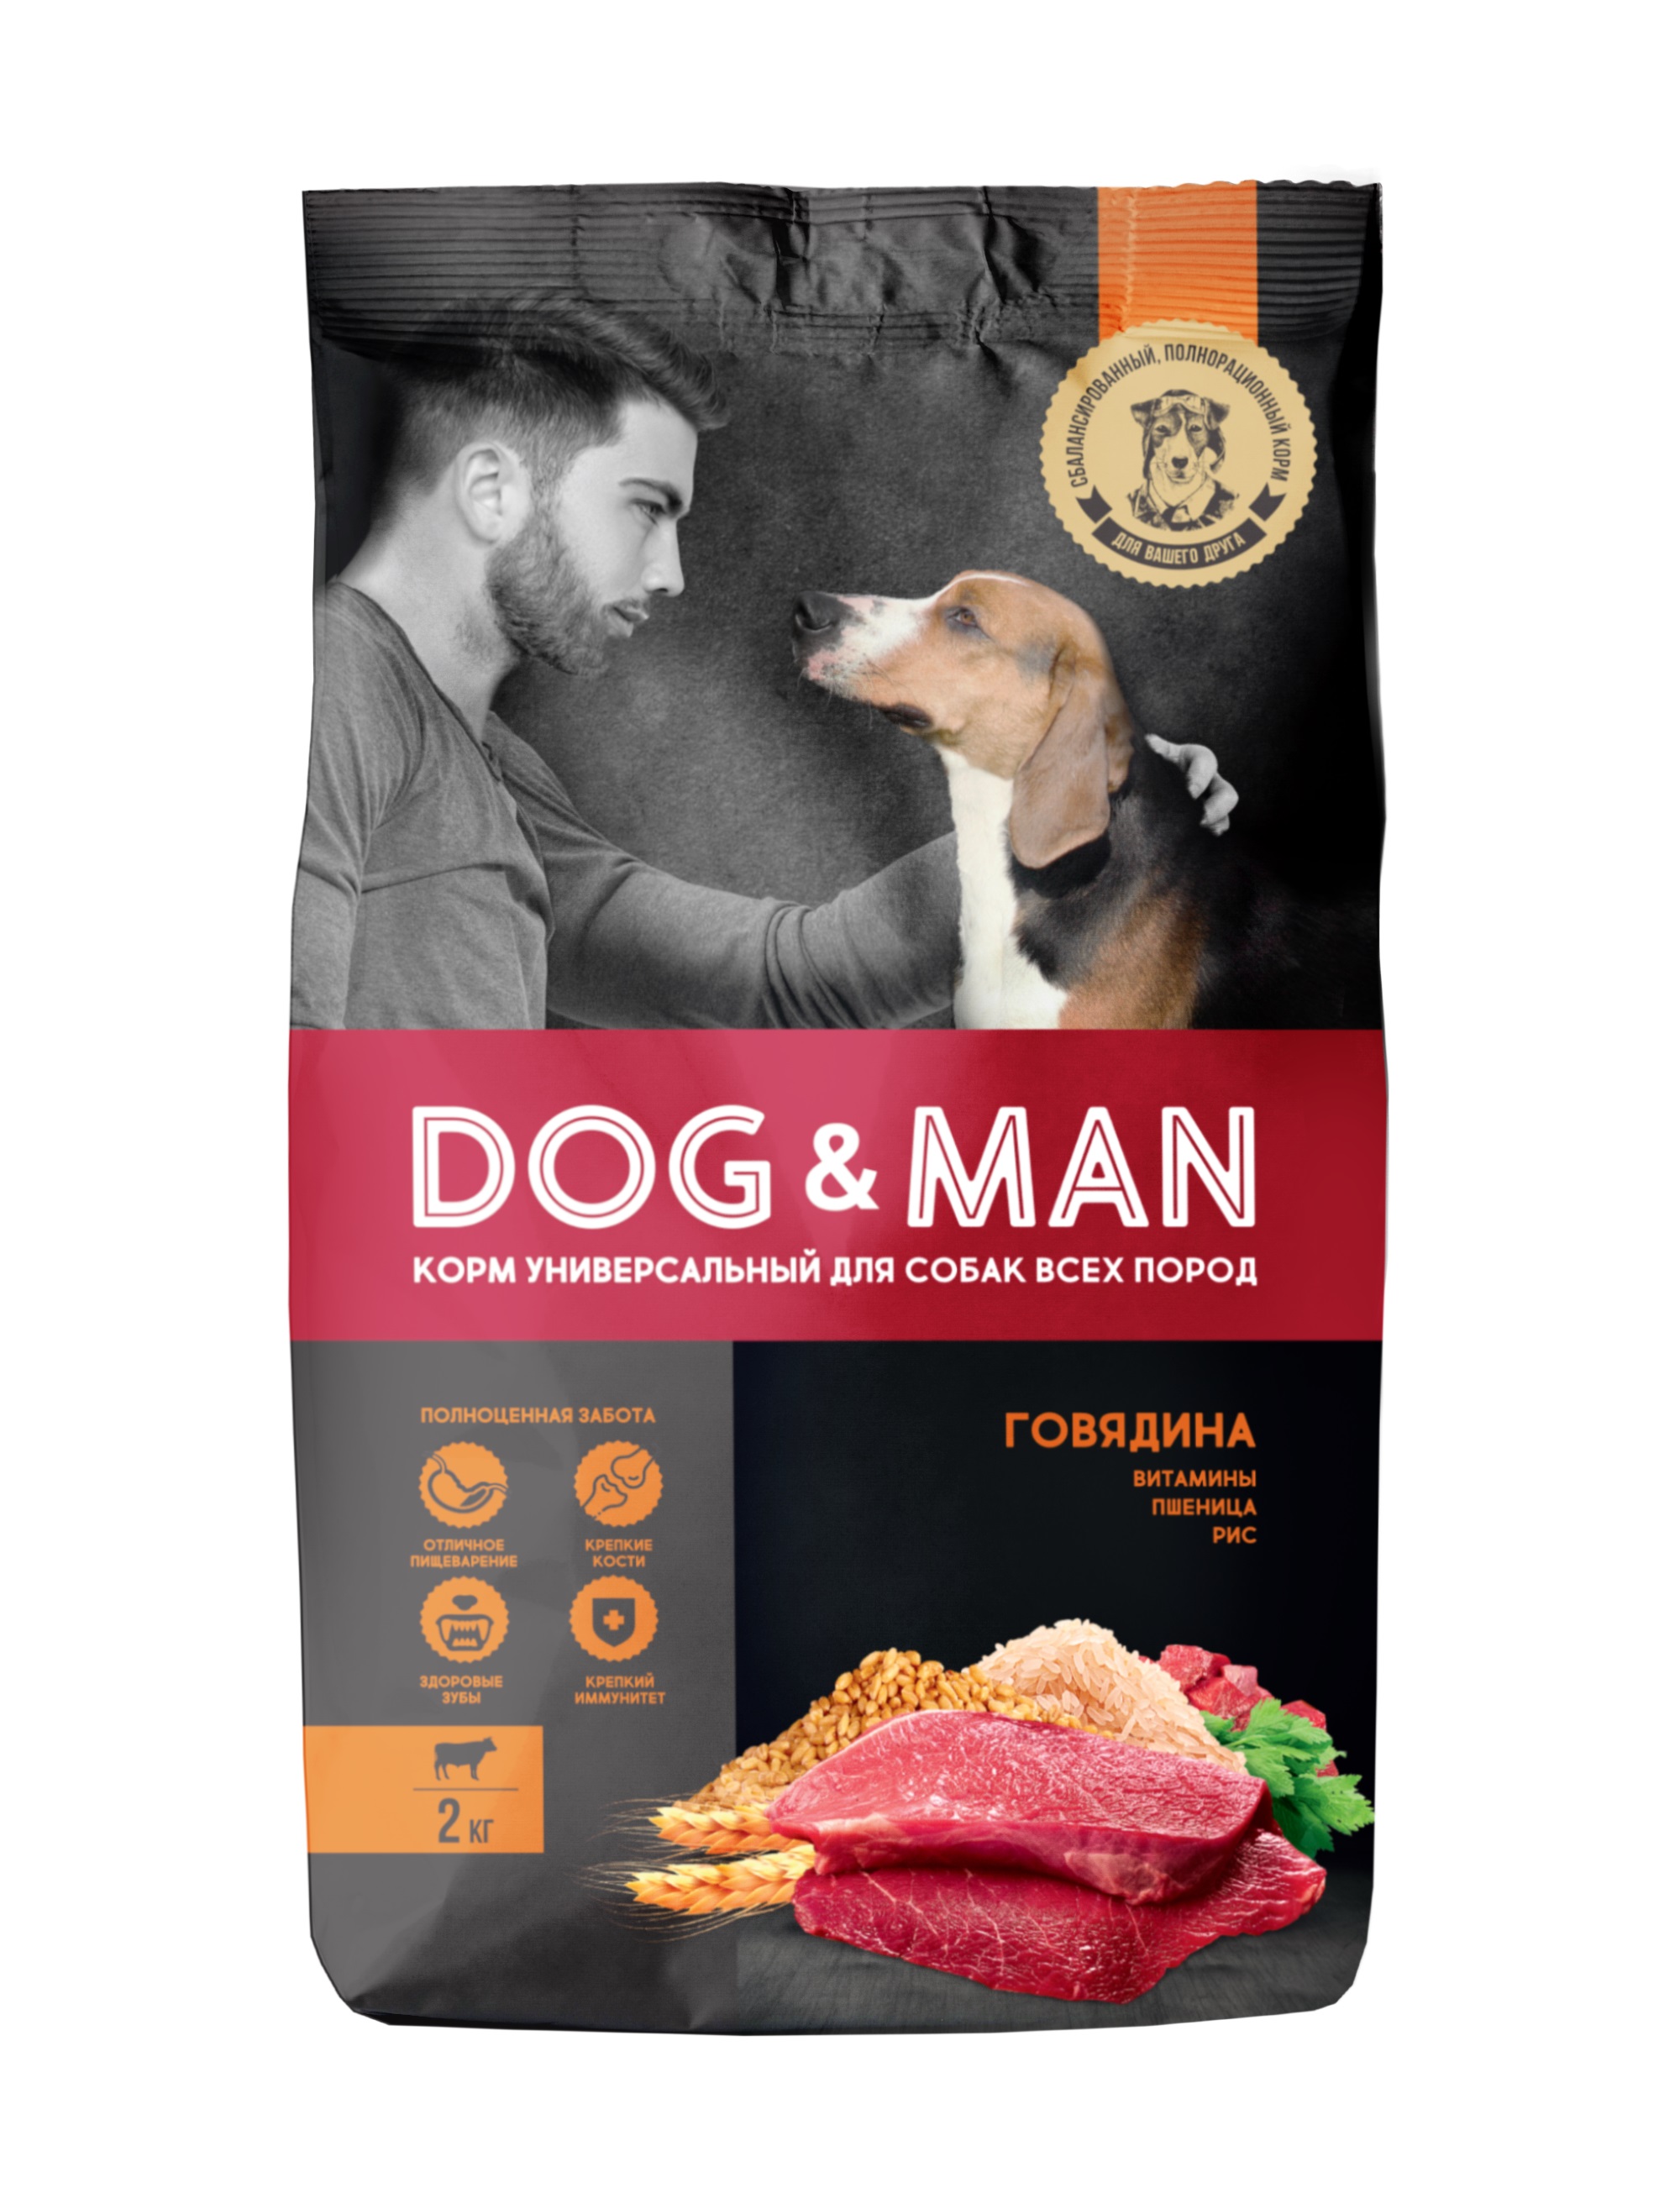 Сухой корм для собак Dog&Man для всех пород, говядина, 2,15кг